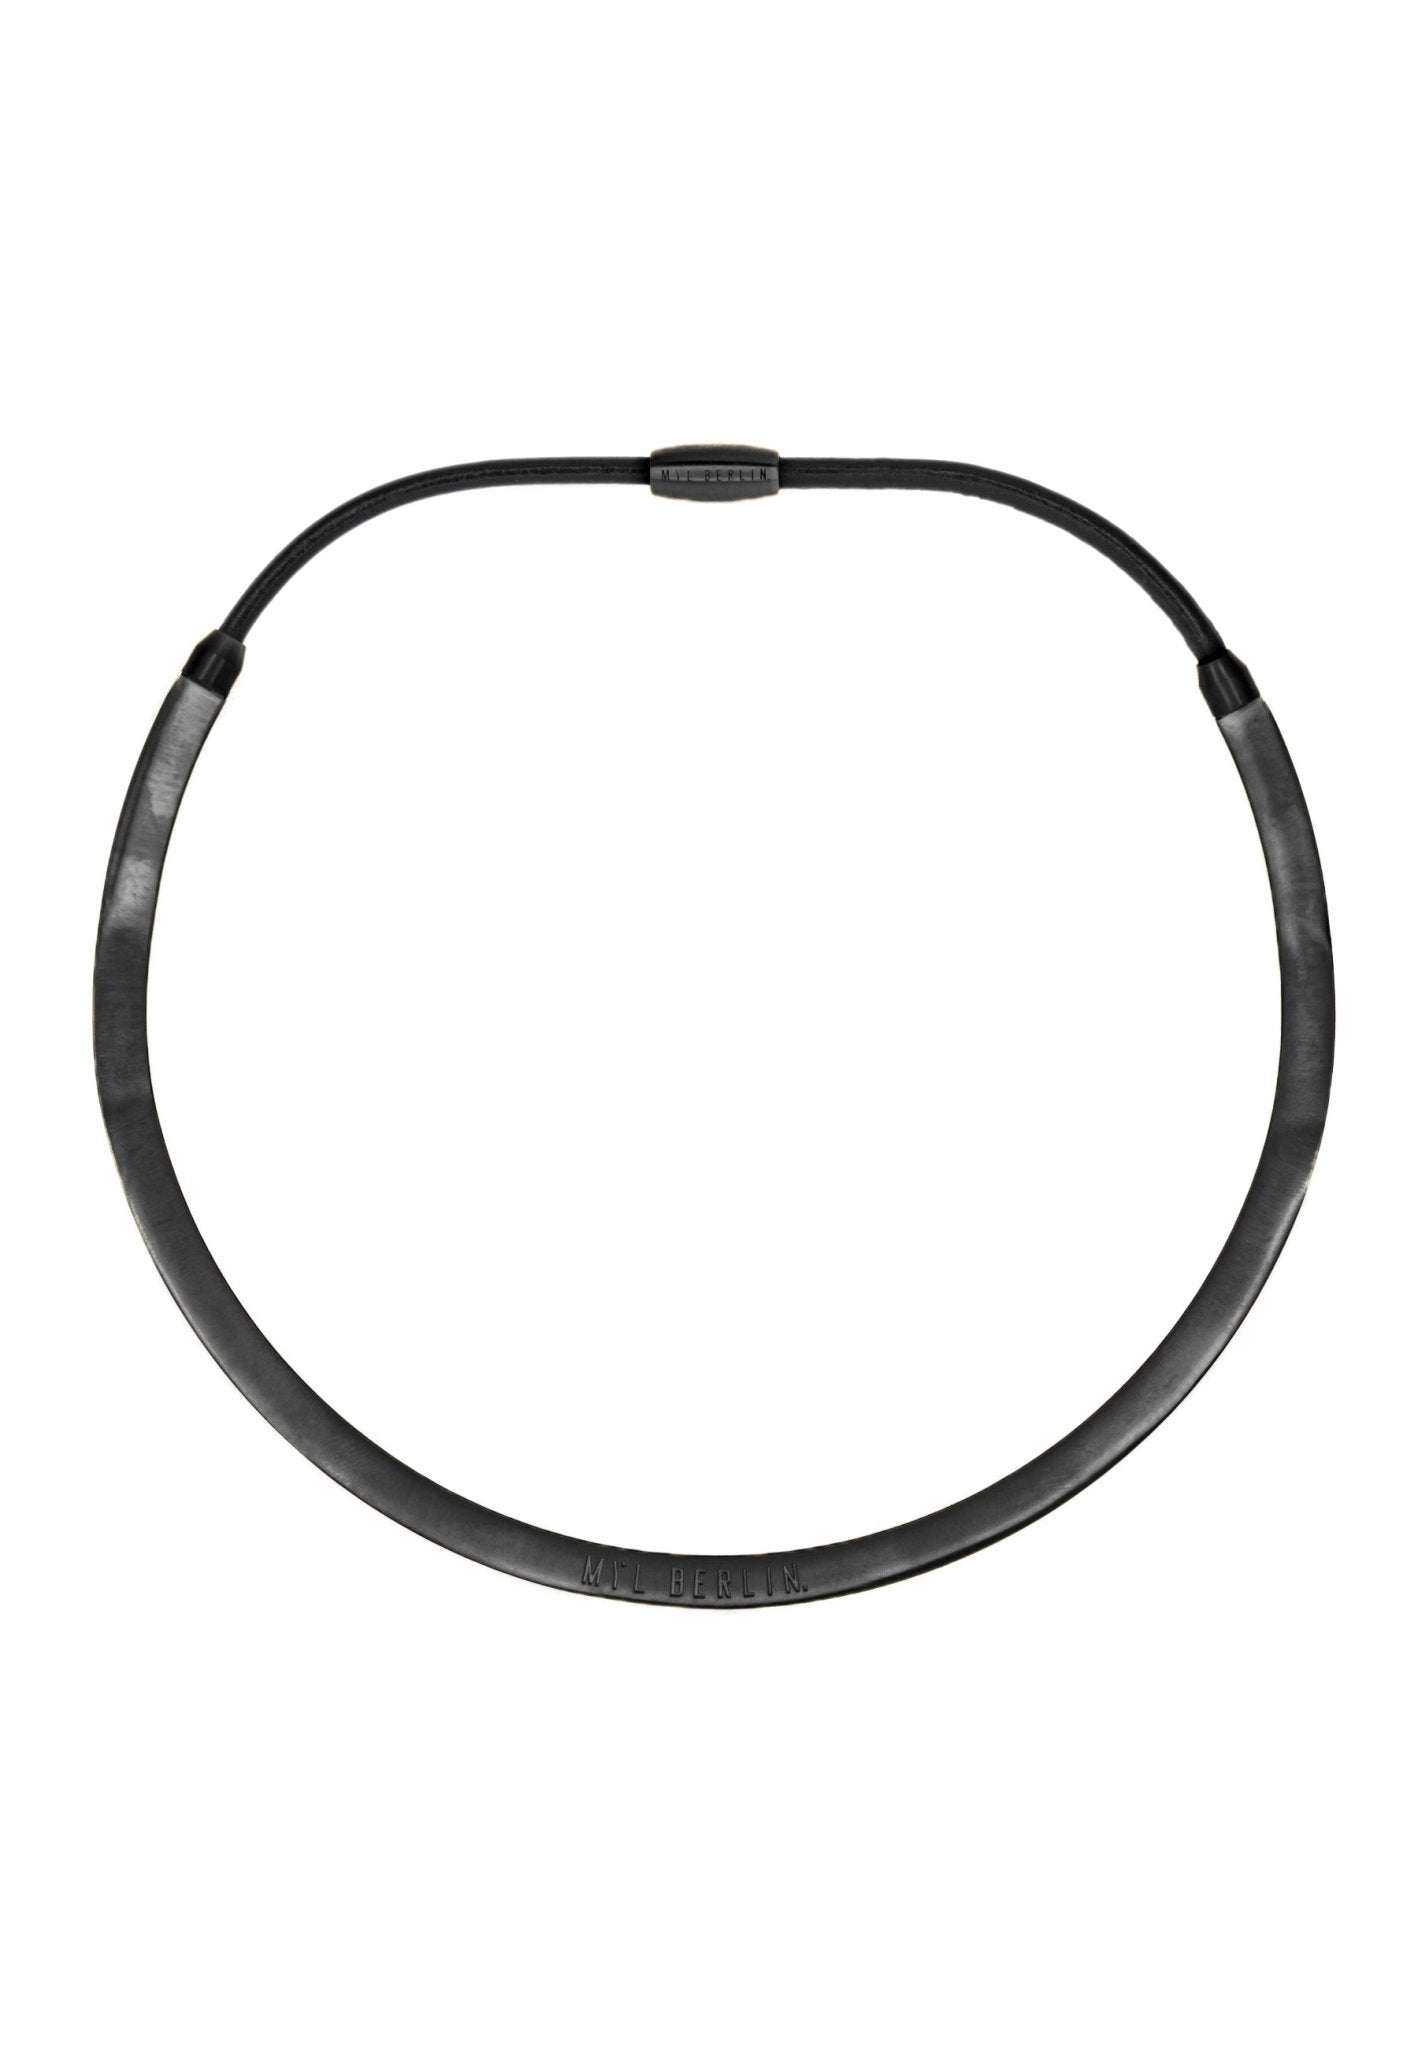 Collar Necklace “Collier" - MYL BERLIN - 4260654111415 - 4260654111415